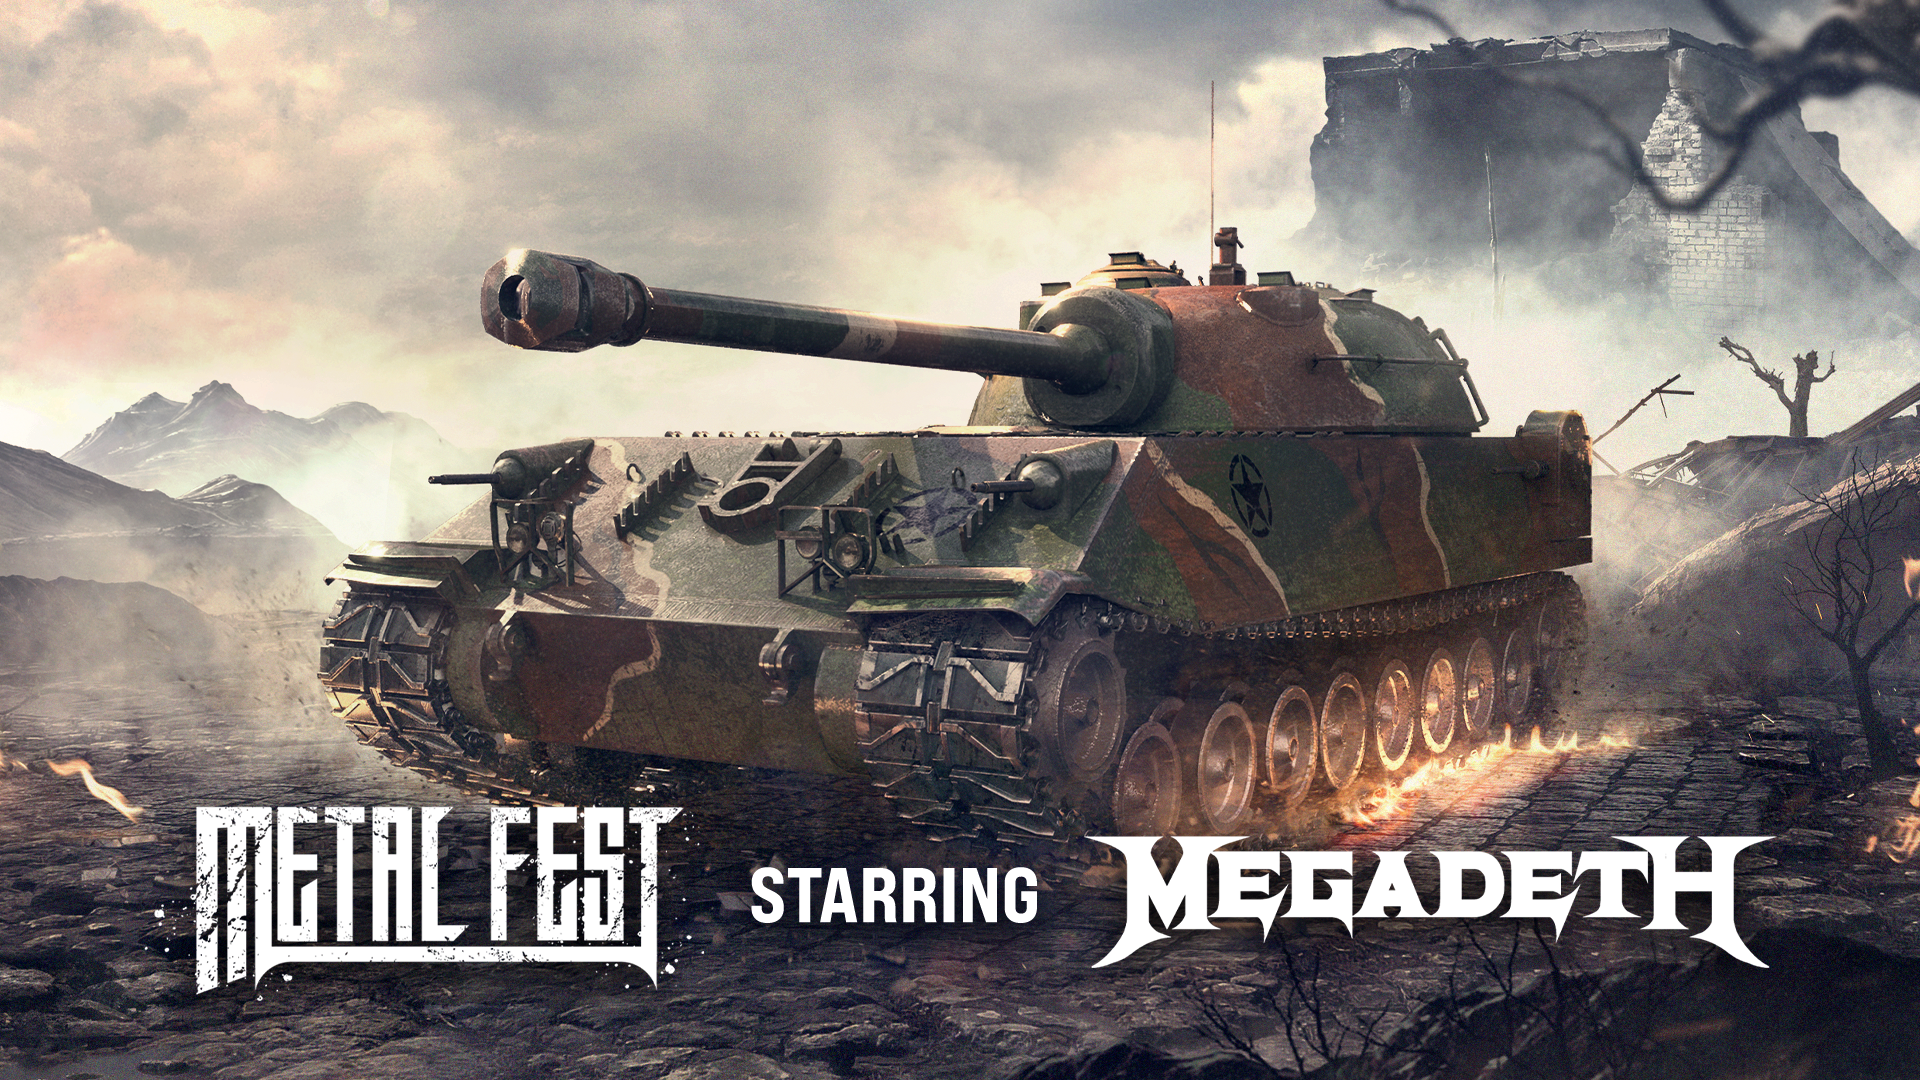 Megadeth Heads to Wargaming's Metal Fest!